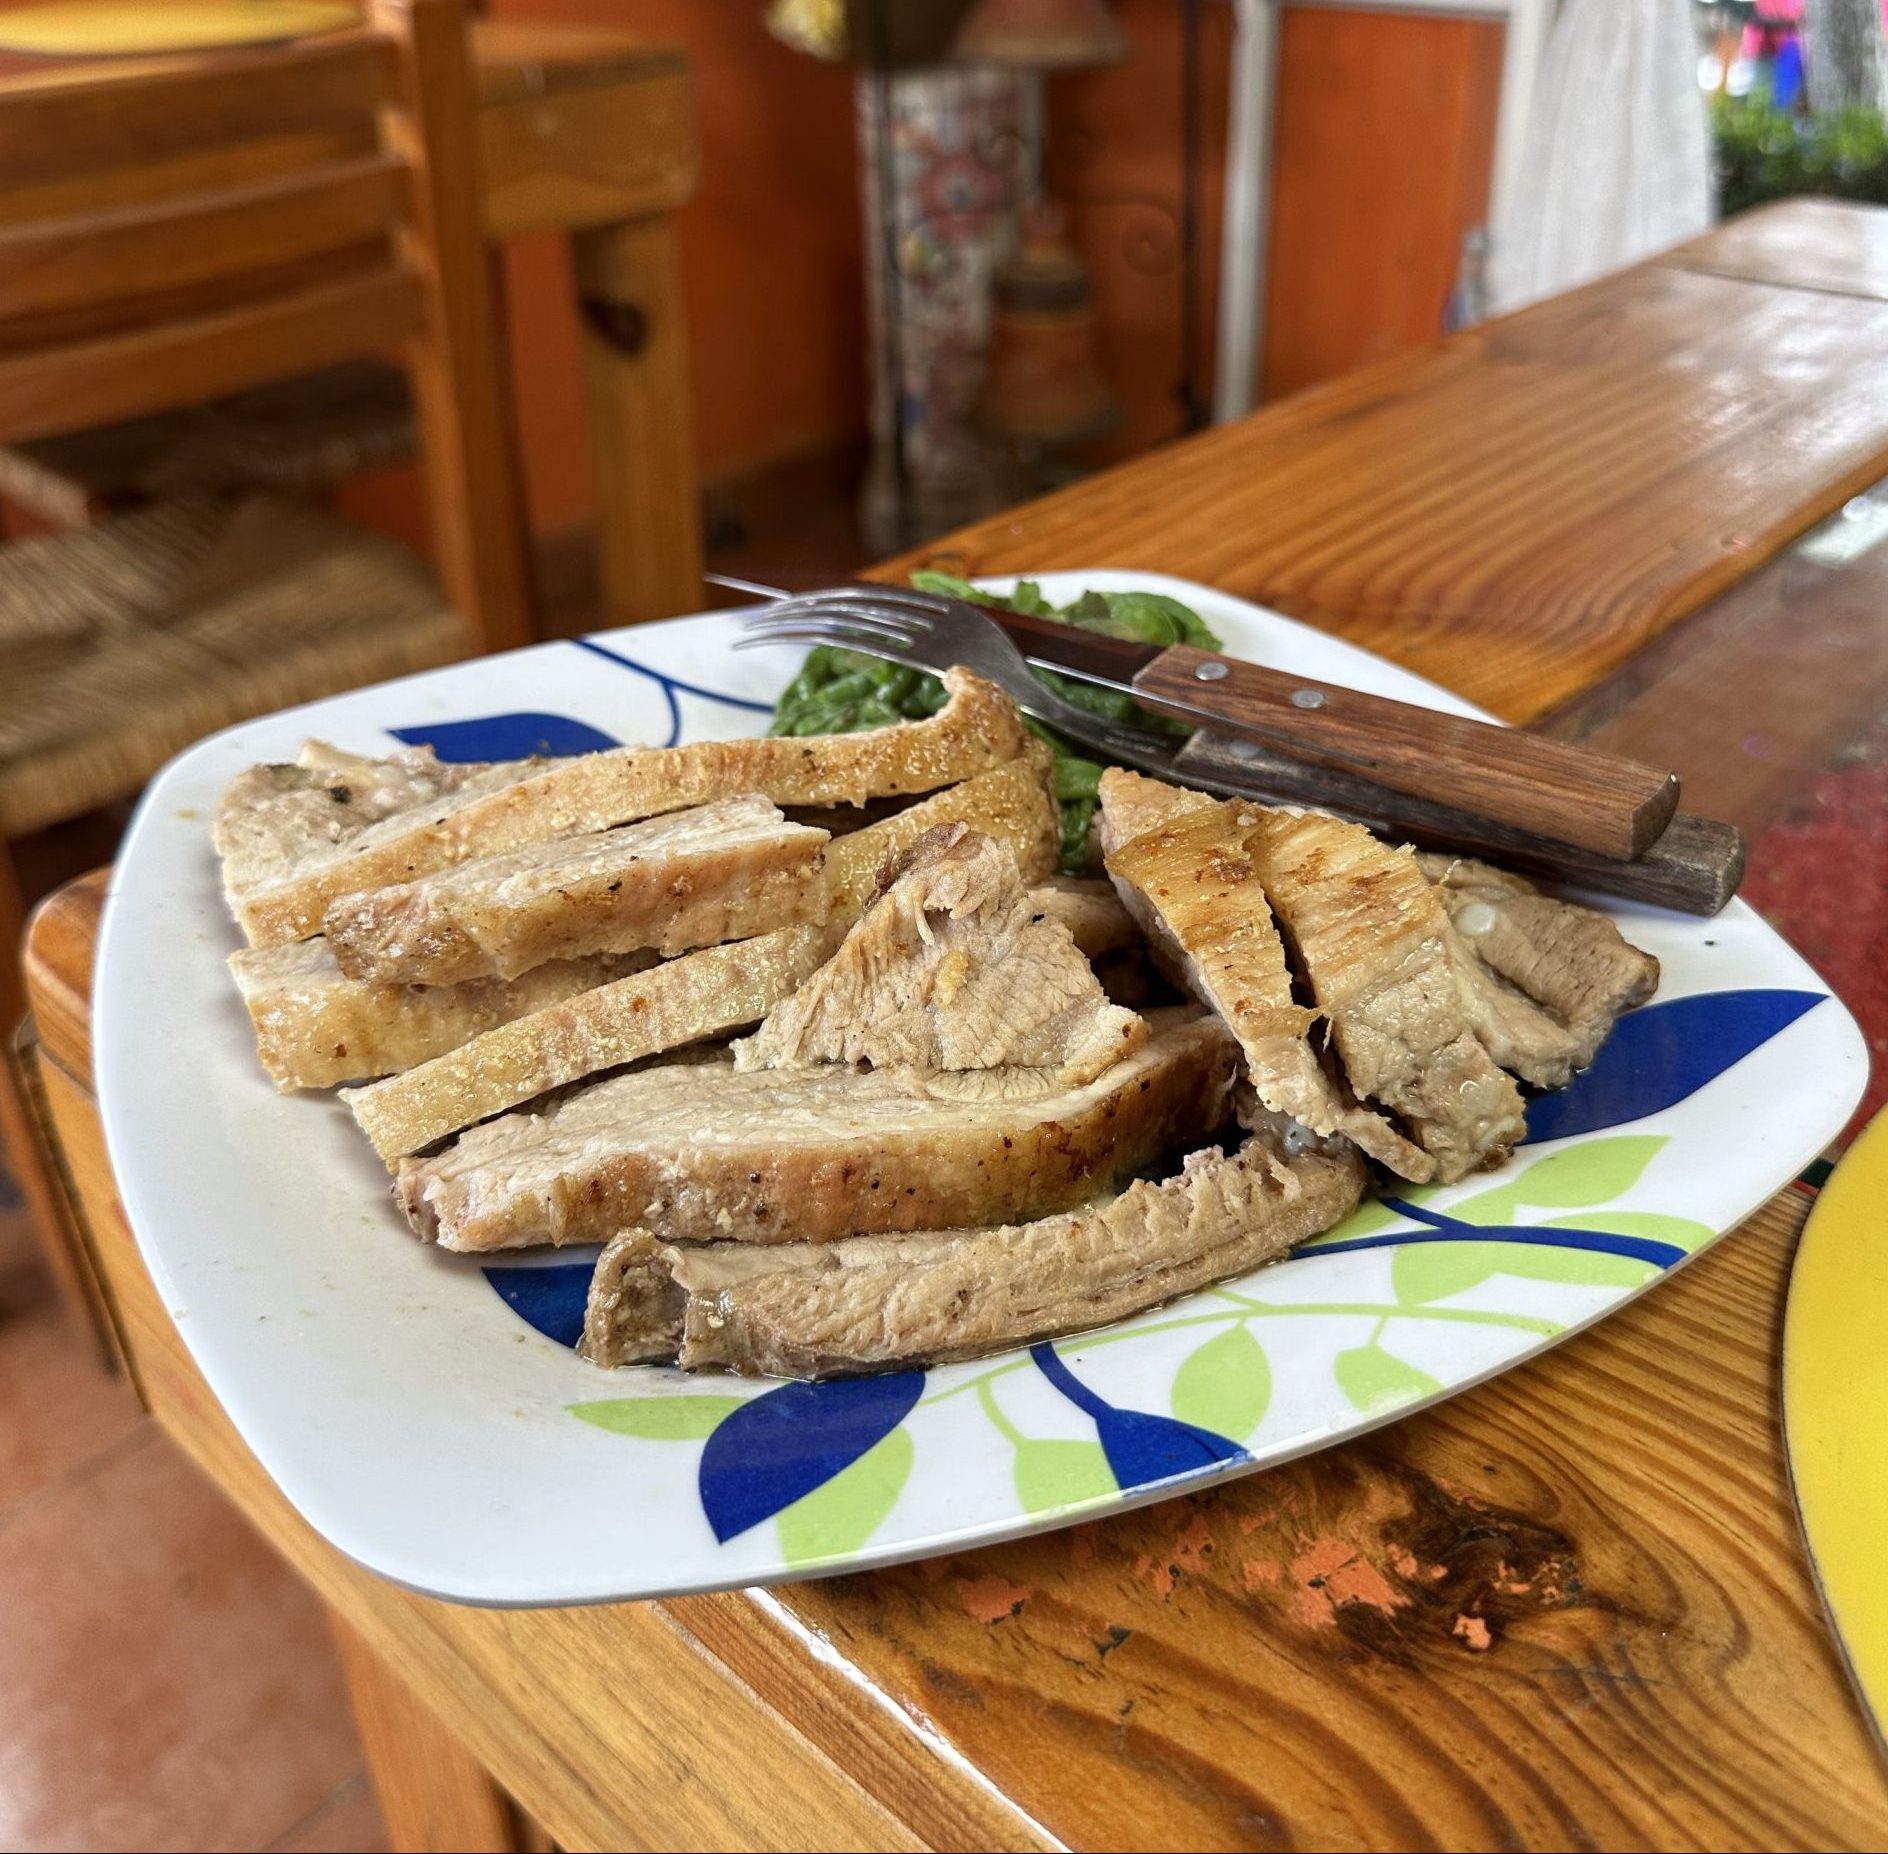 Tacos de jabalí asado son un platillo típico de la Casa Naranja